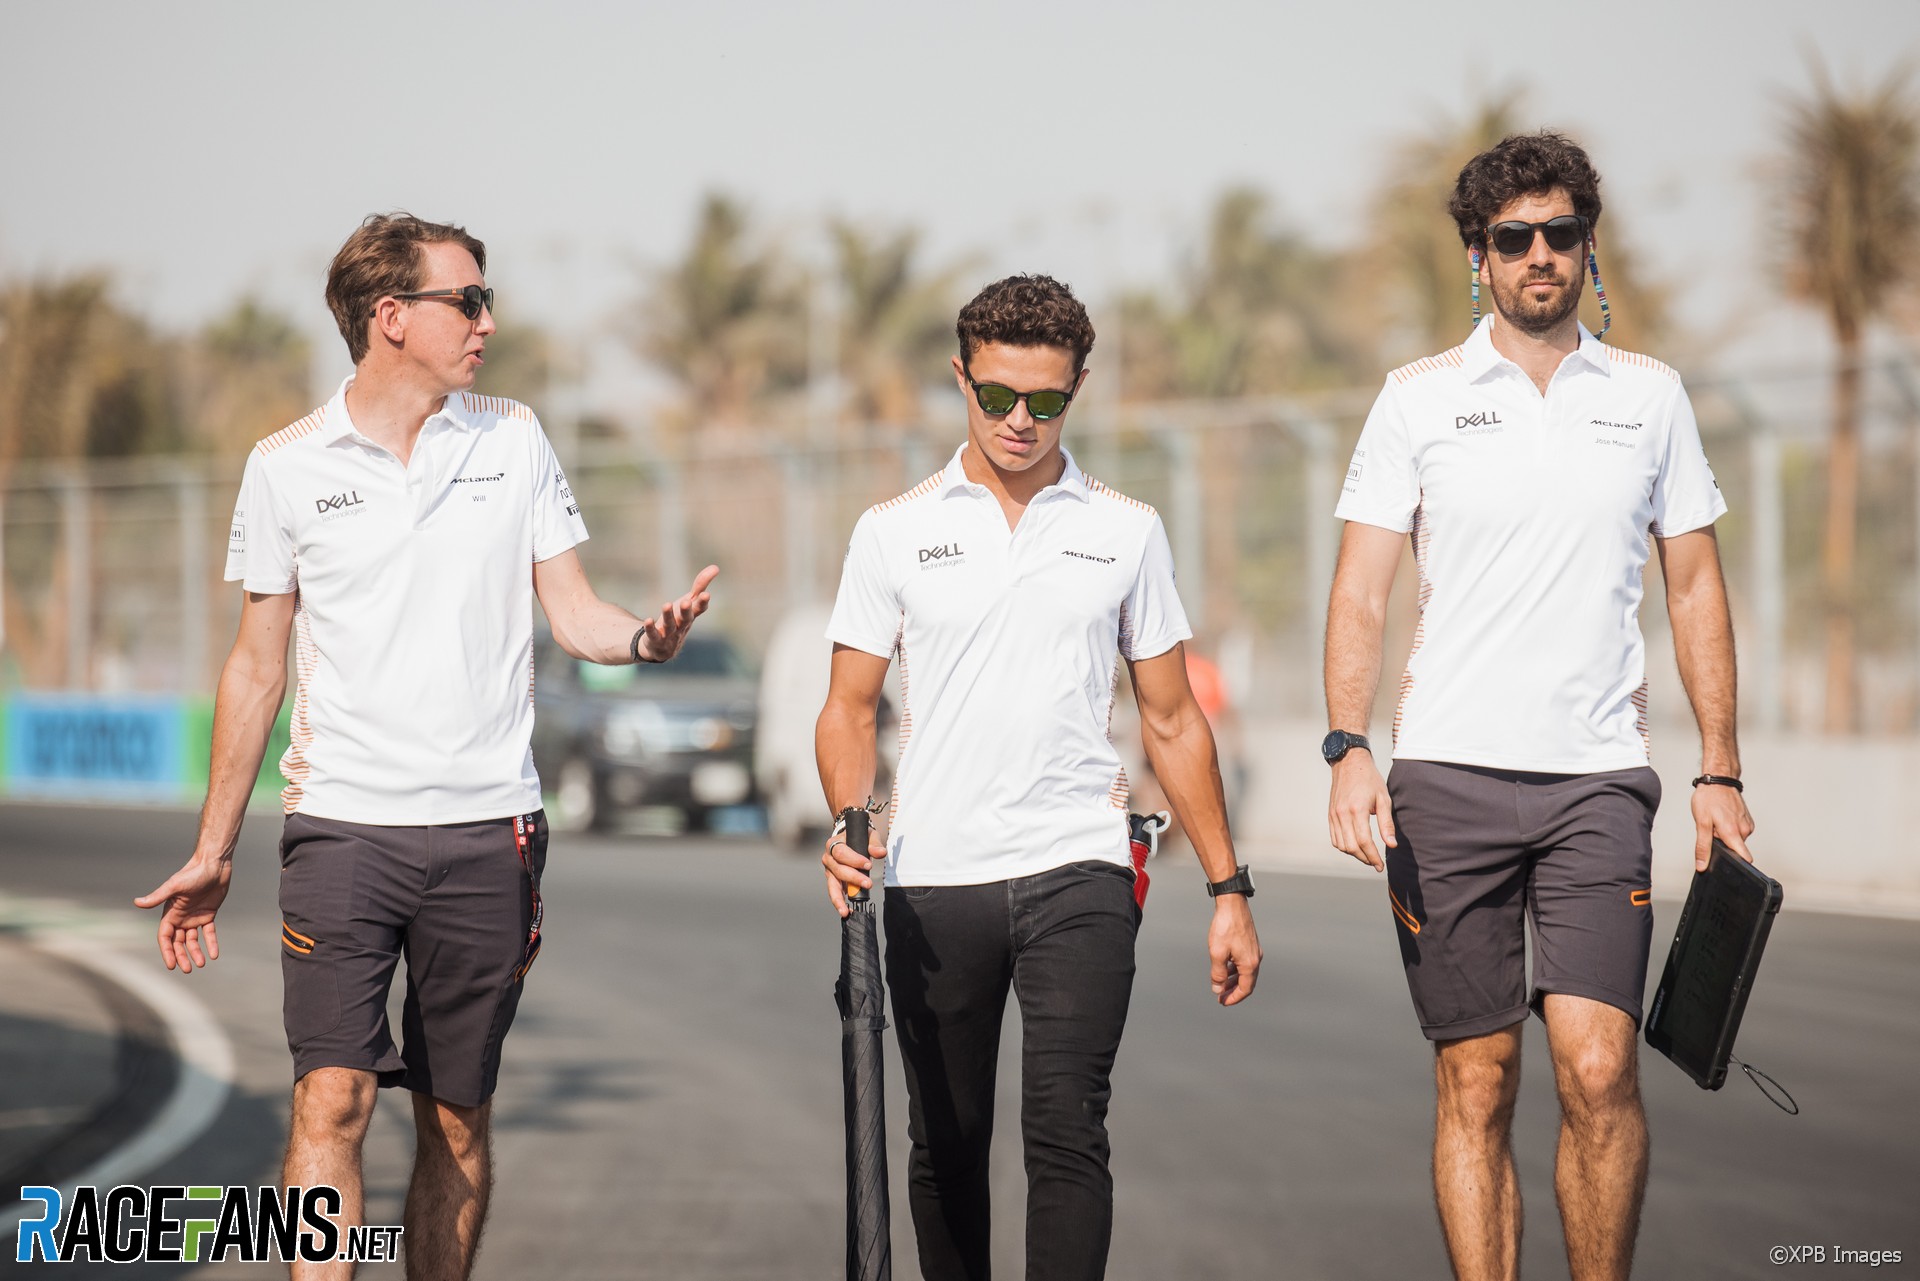 Lando Norris, McLaren, Jeddah Corniche Circuit, 2021